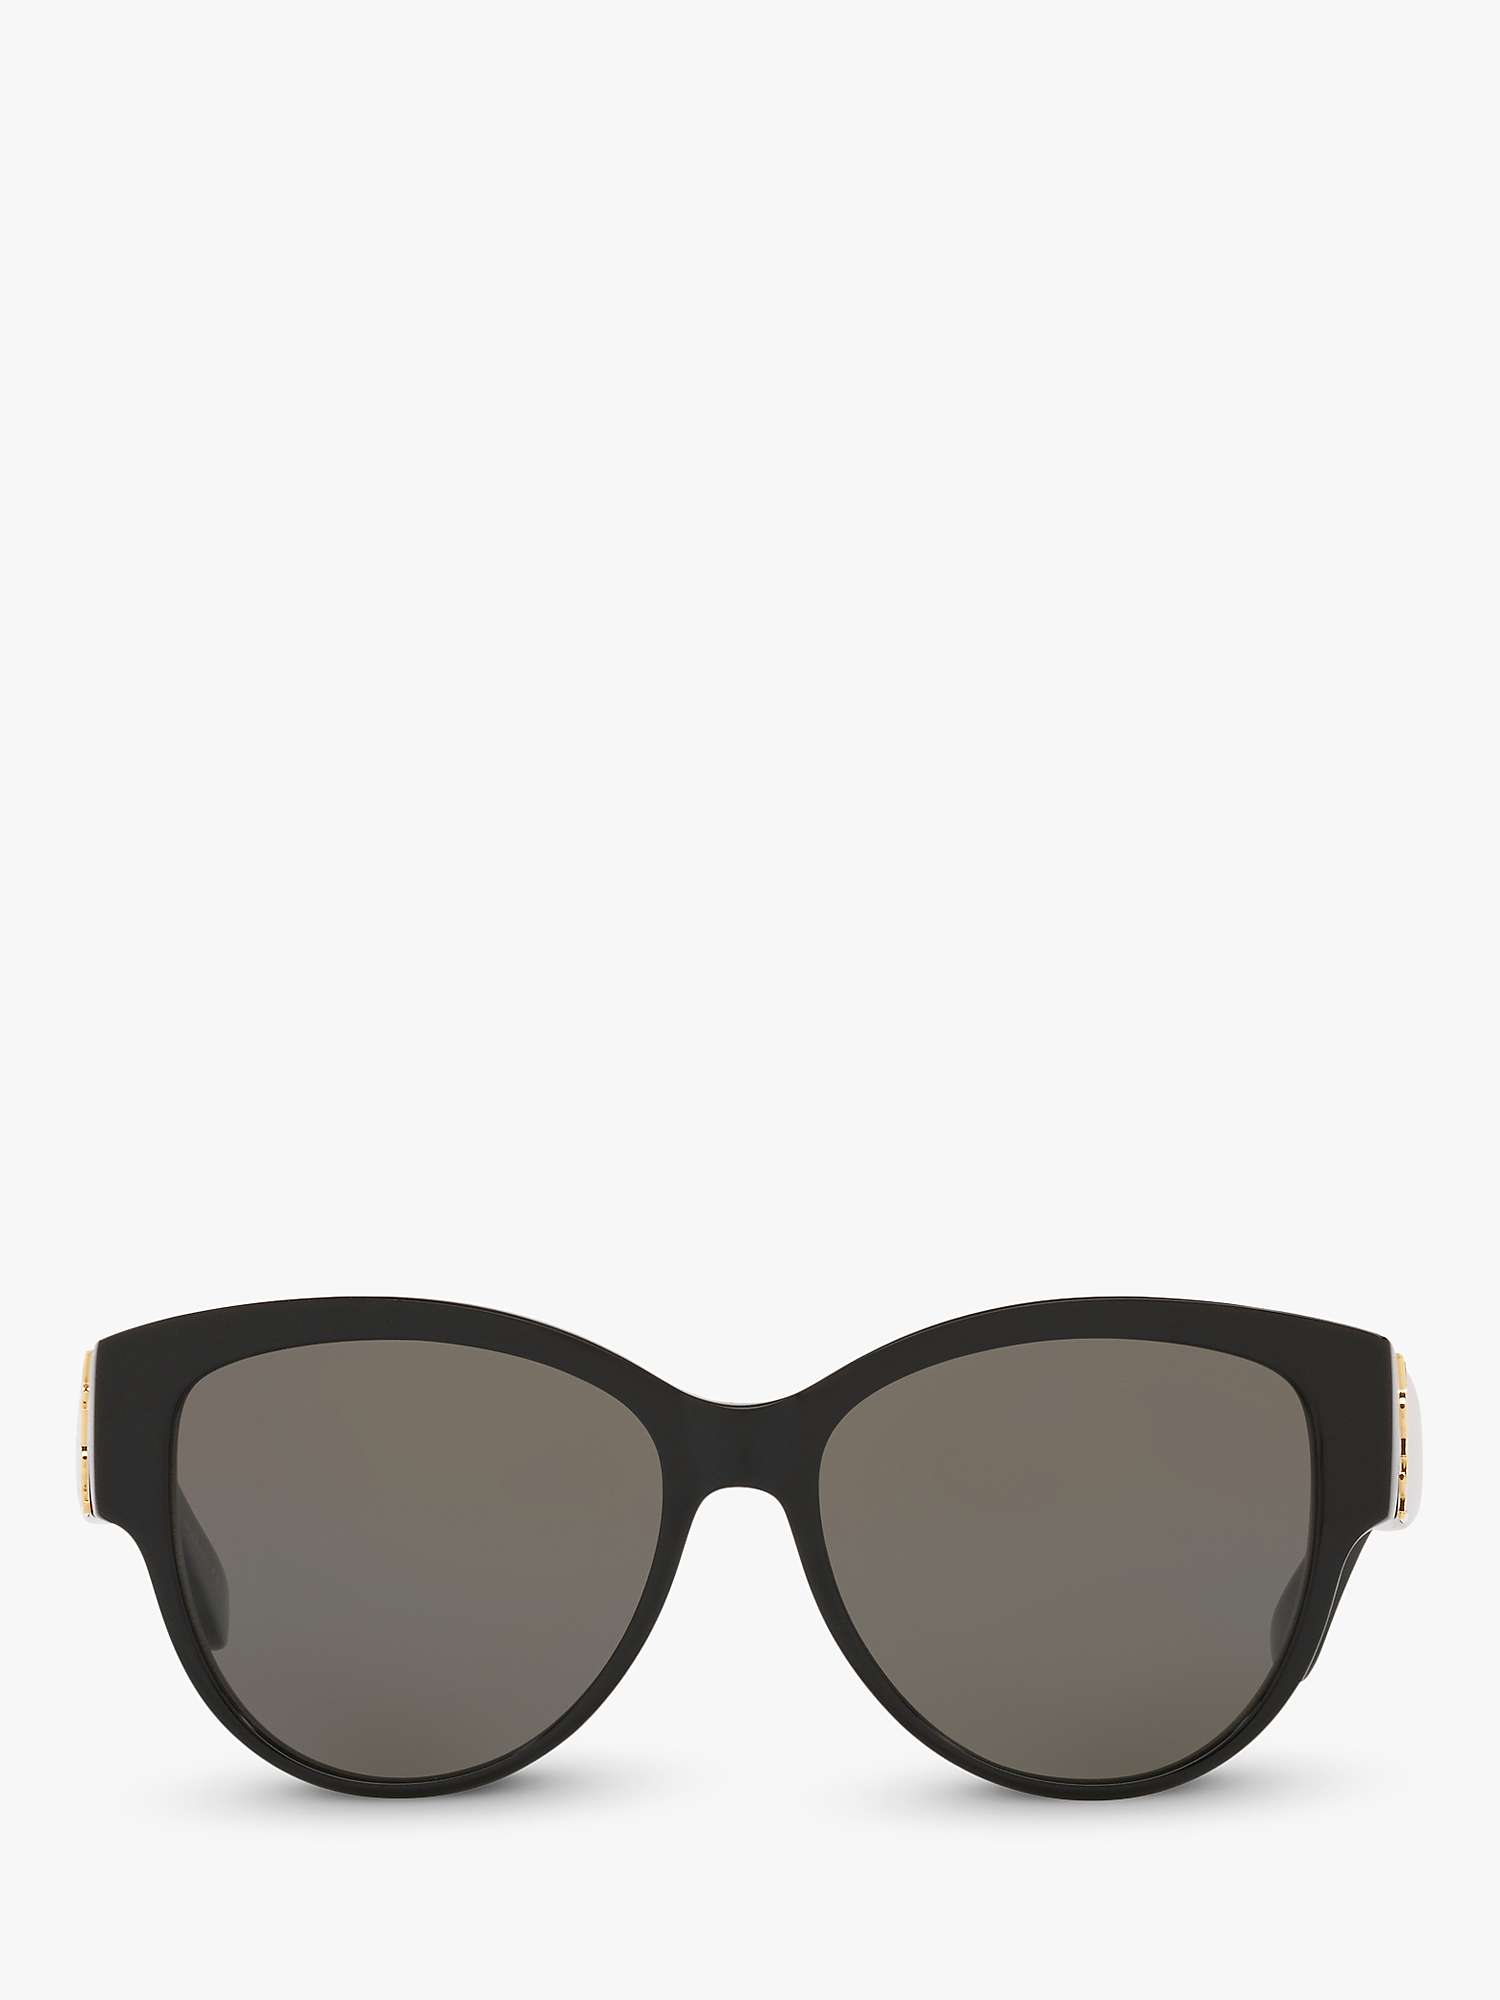 Buy Yves Saint Laurent SL M3 55 Women's Oval Sunglasses, Black/Grey Online at johnlewis.com